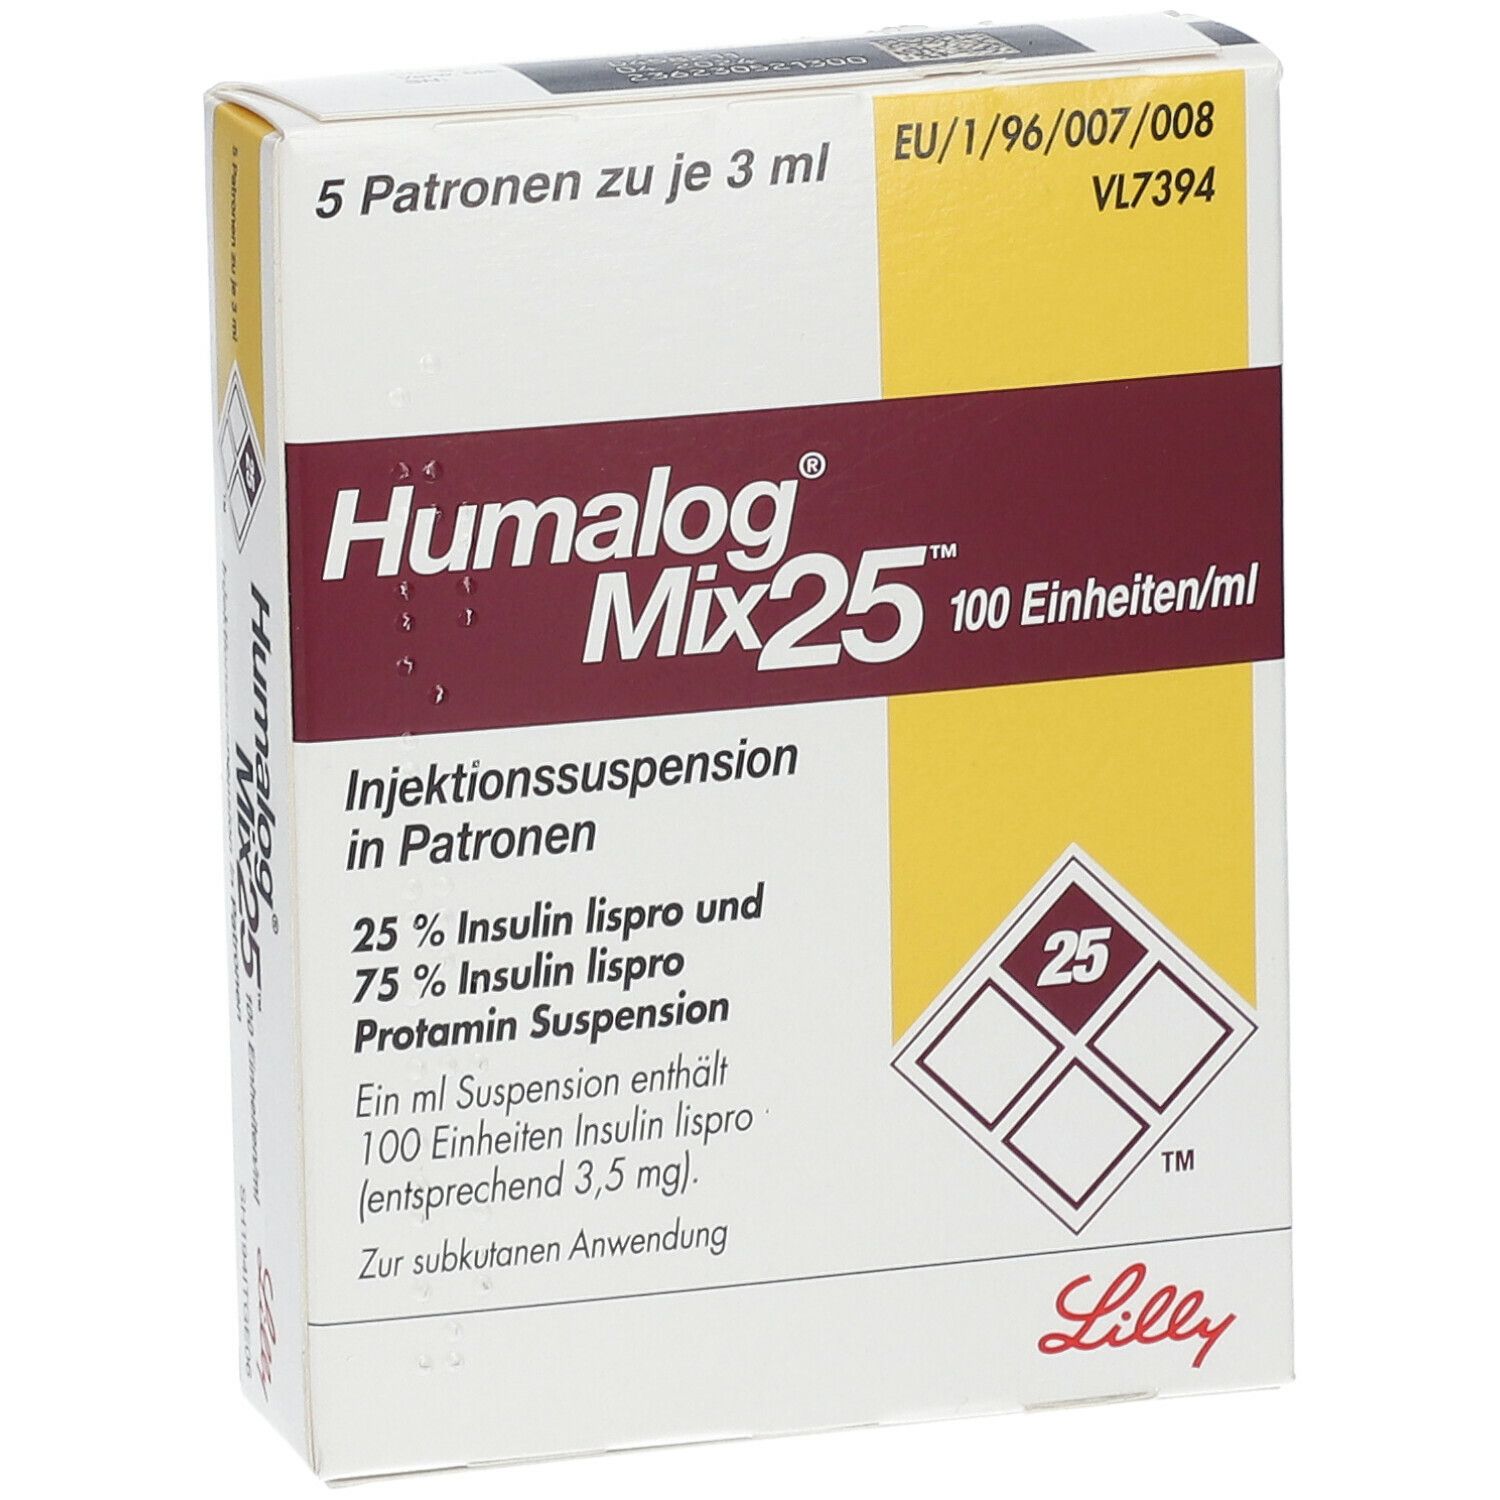 Humalog® Mix25™ 100 Einheiten/ml